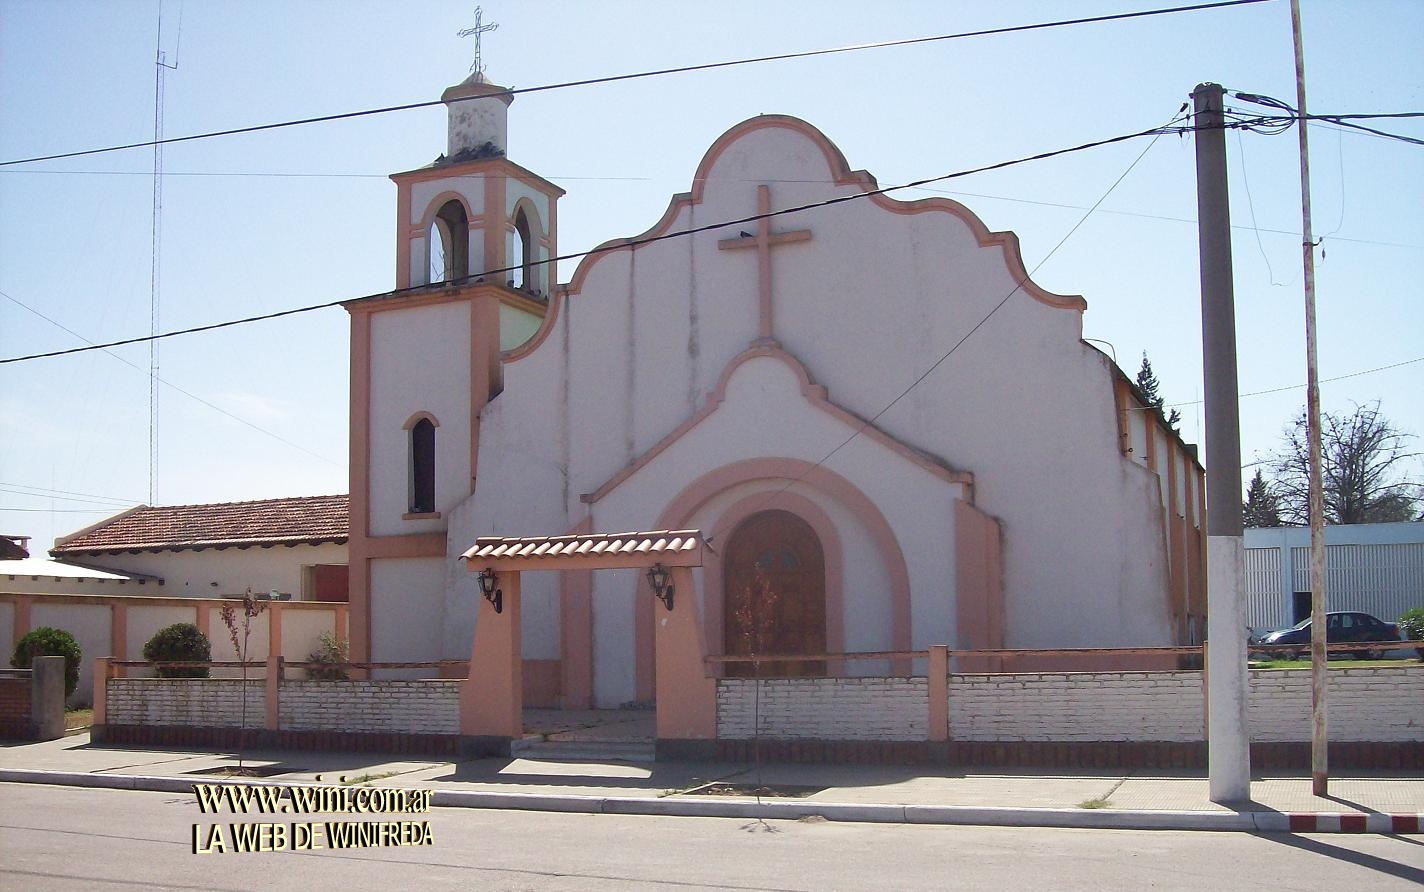 Catholic Church in Winifreda Source: www.wini.com.ar